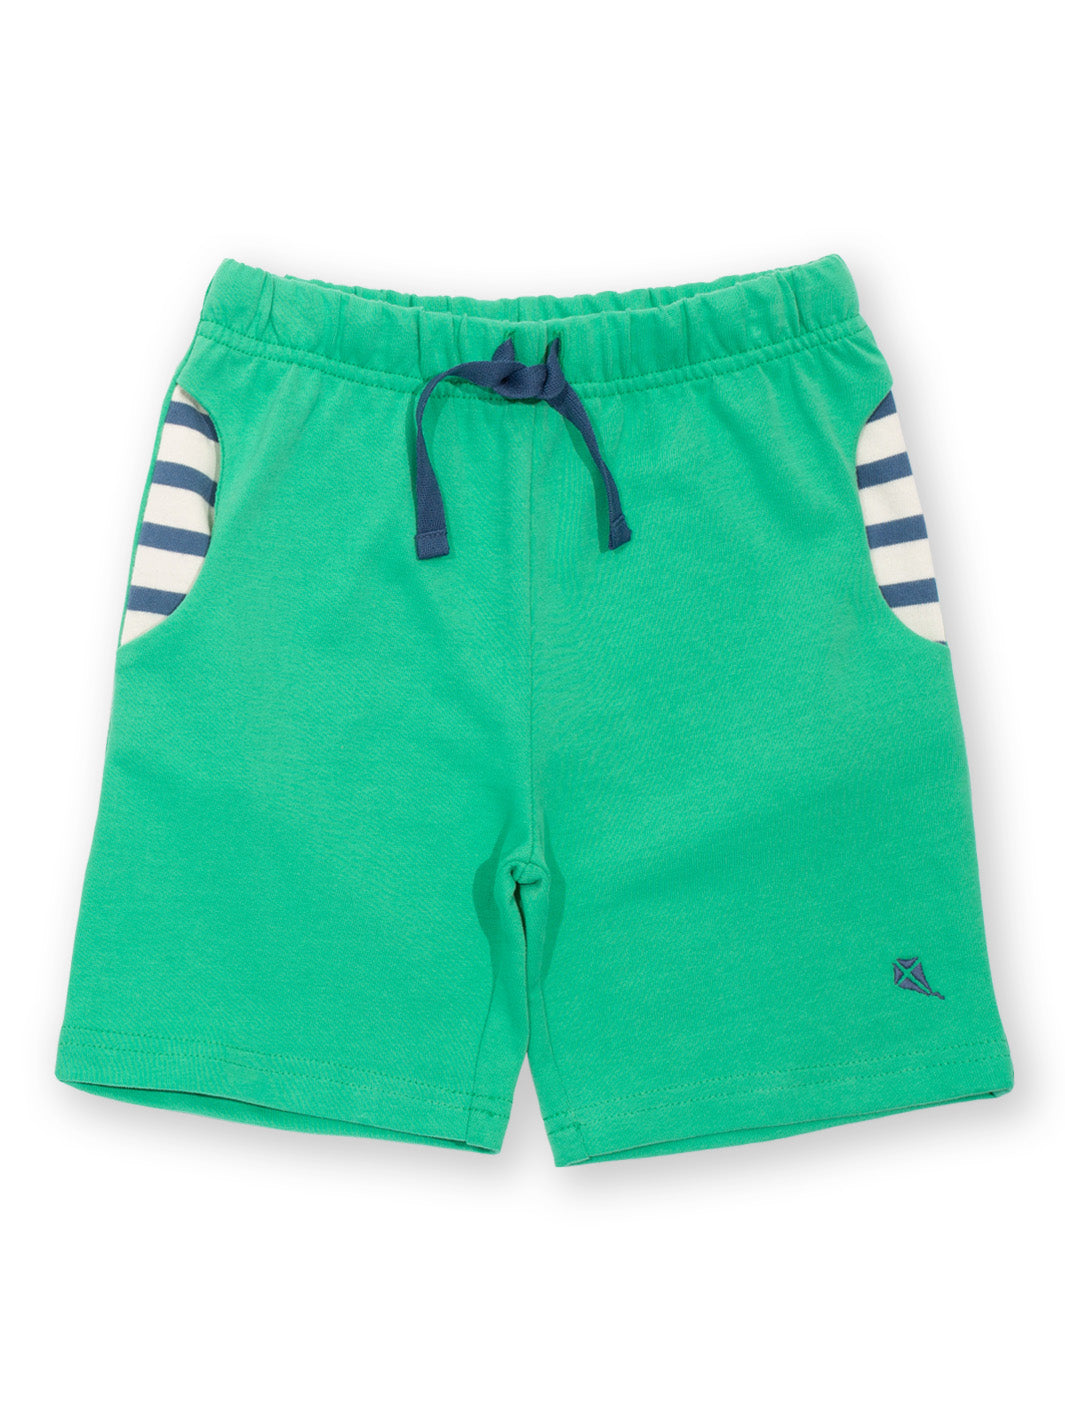 Kite Corfe Green Shorts SALE